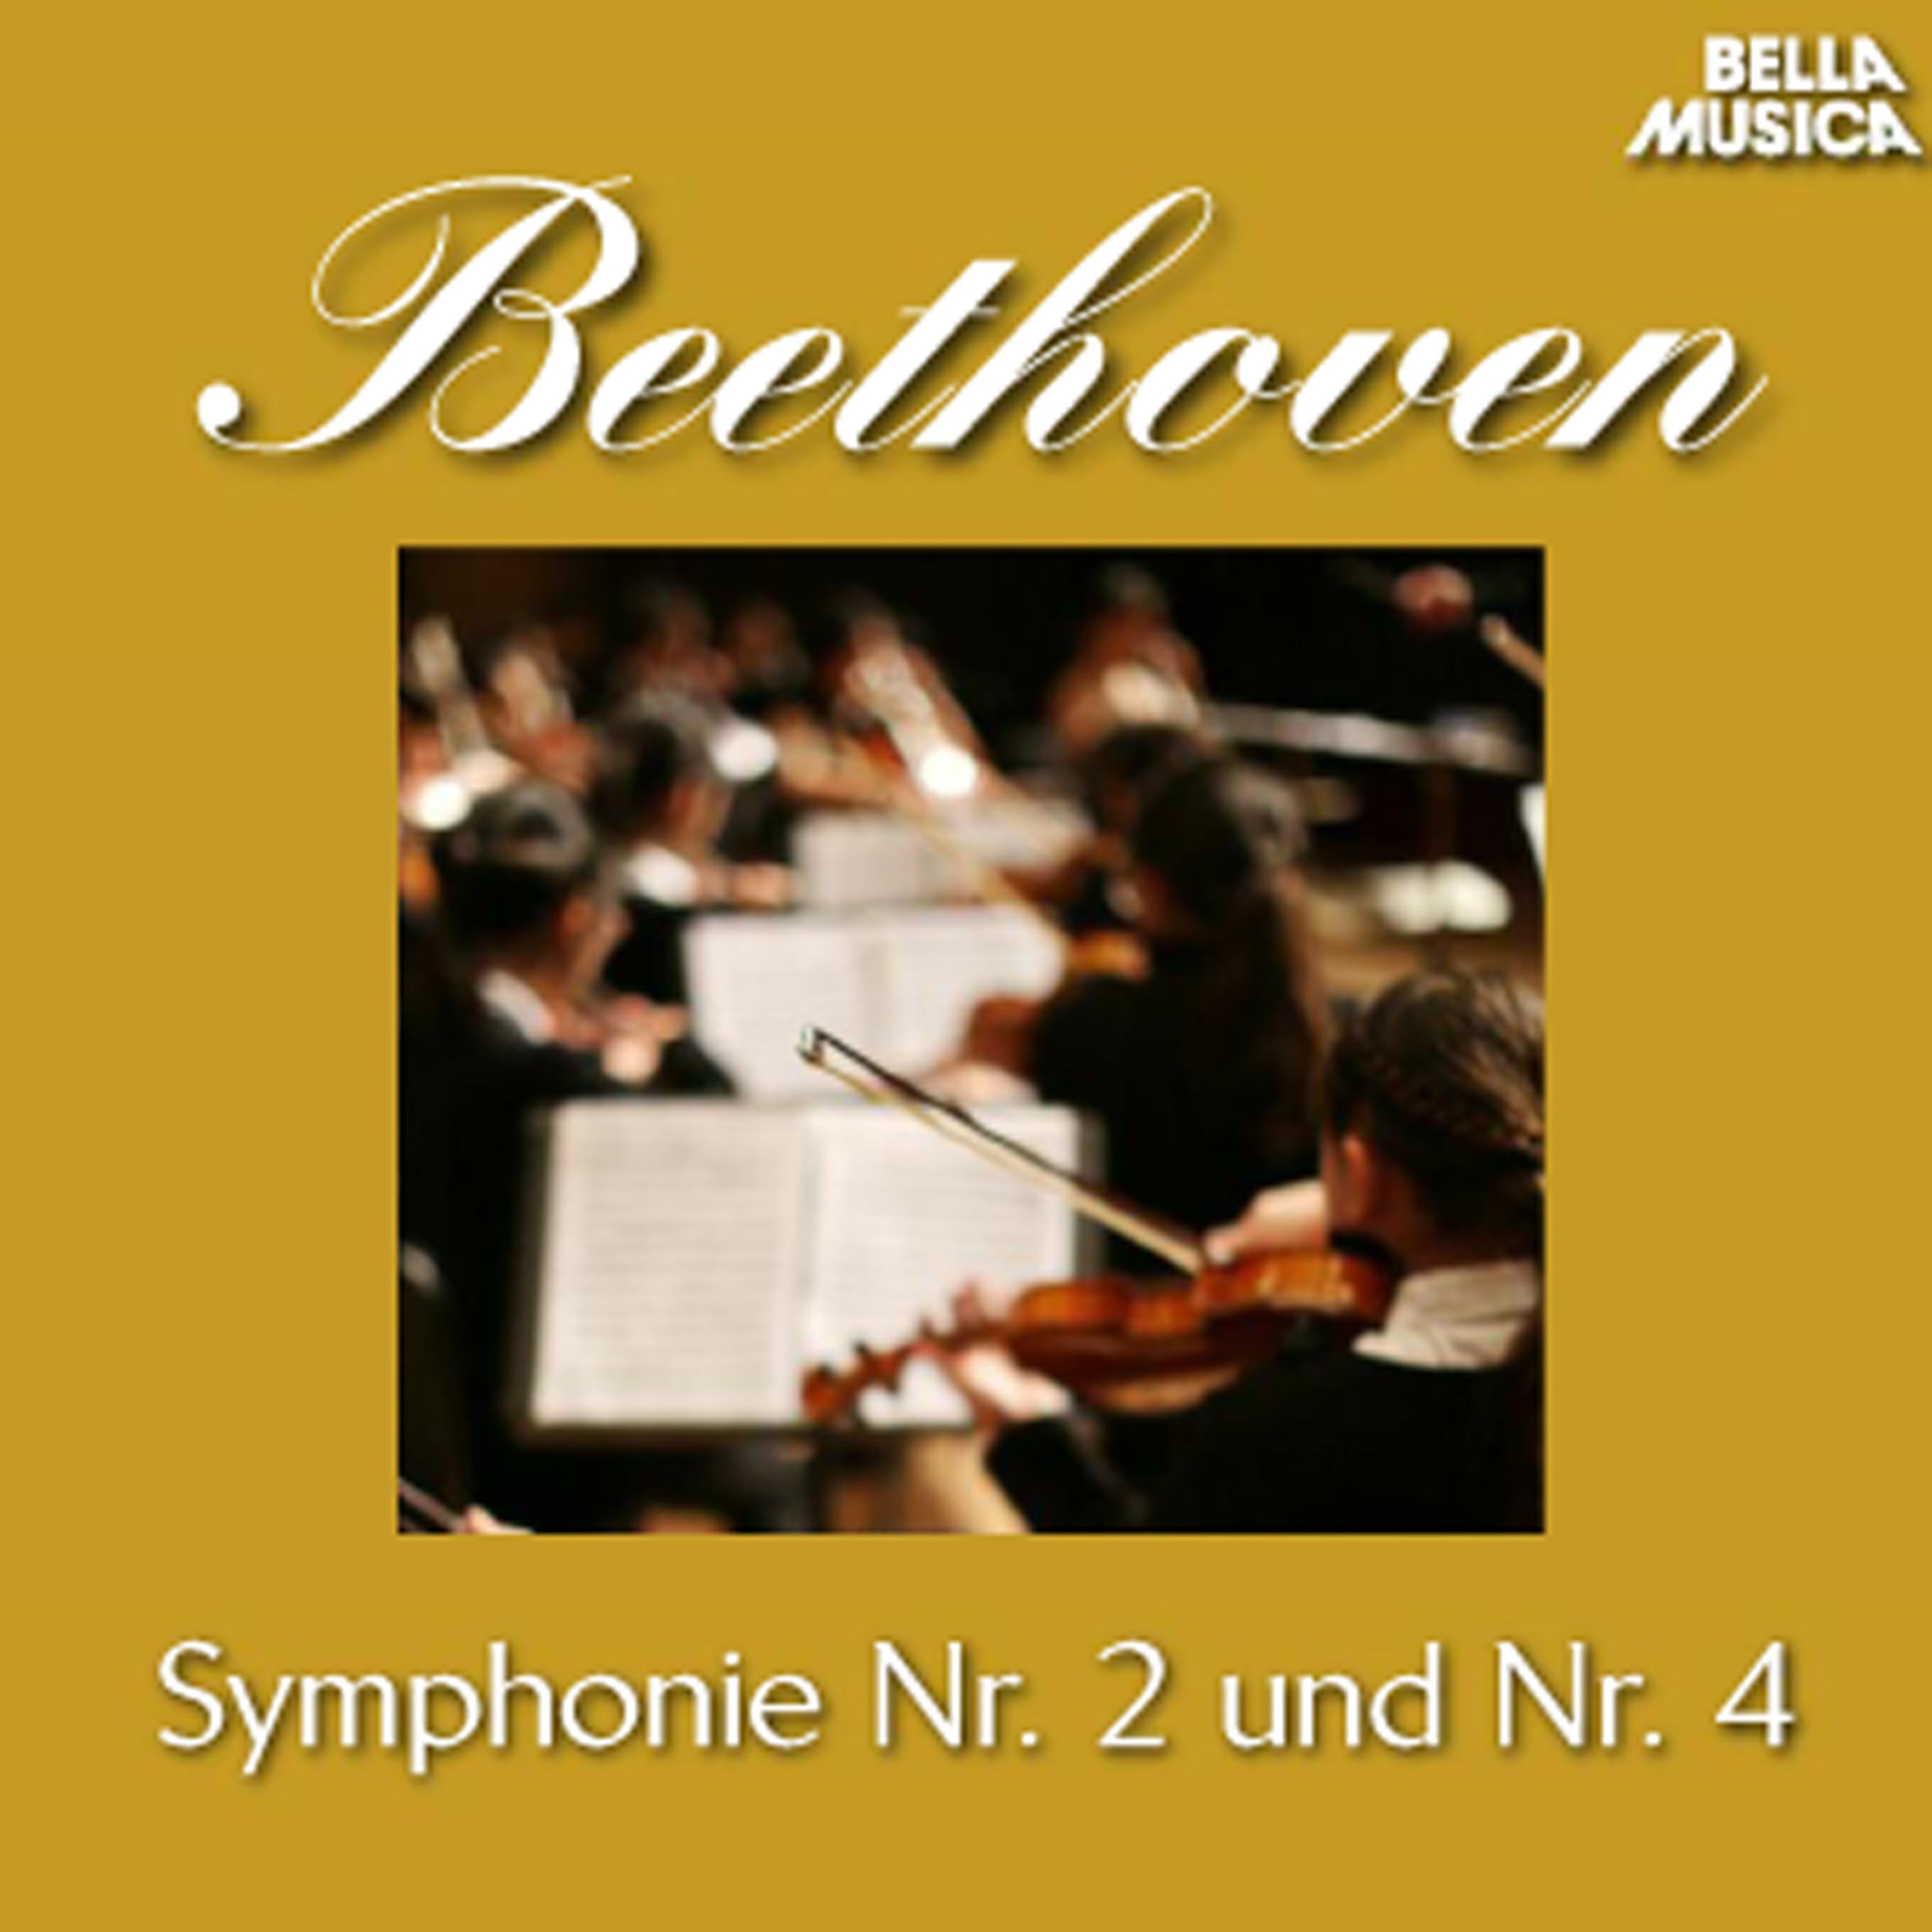 Sinfonie No. 2 fü r Orchester in D Major, Op. 36: IV. Allegro molto